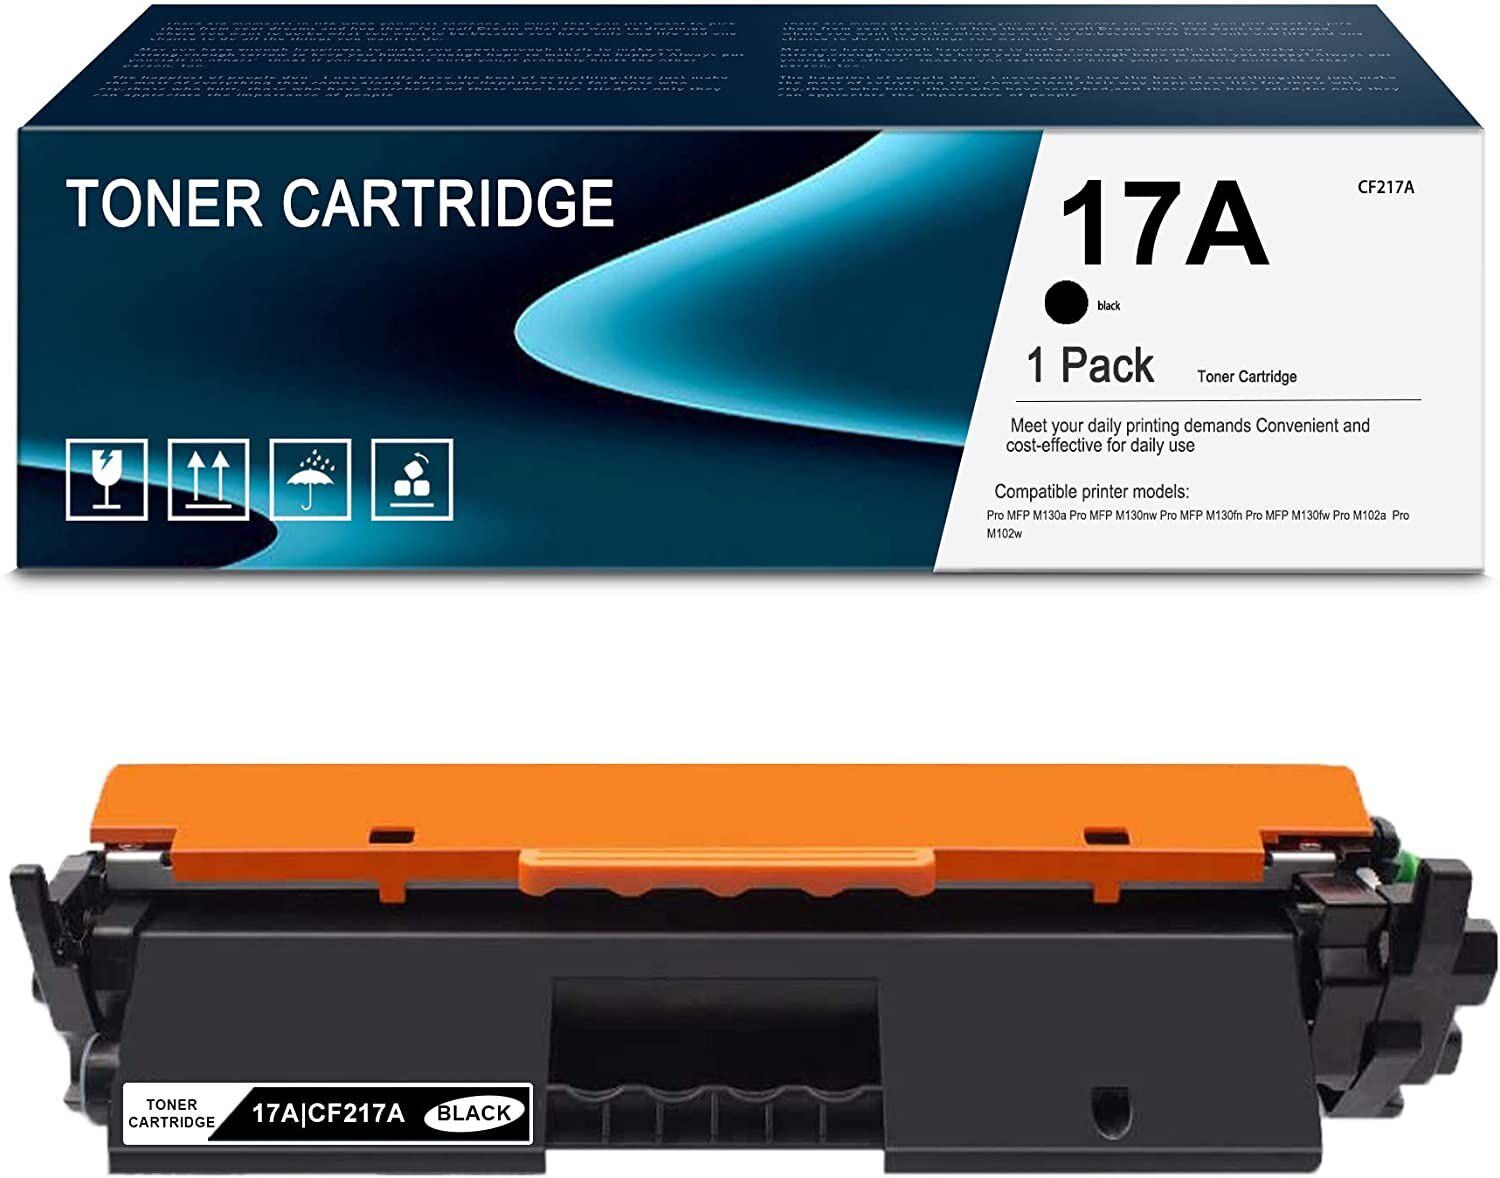 tweeling Hover pizza 17A Toner Cartridges CF217A Black for HP LaserJet Pro MFP M130a 102w 102a  LOT | eBay